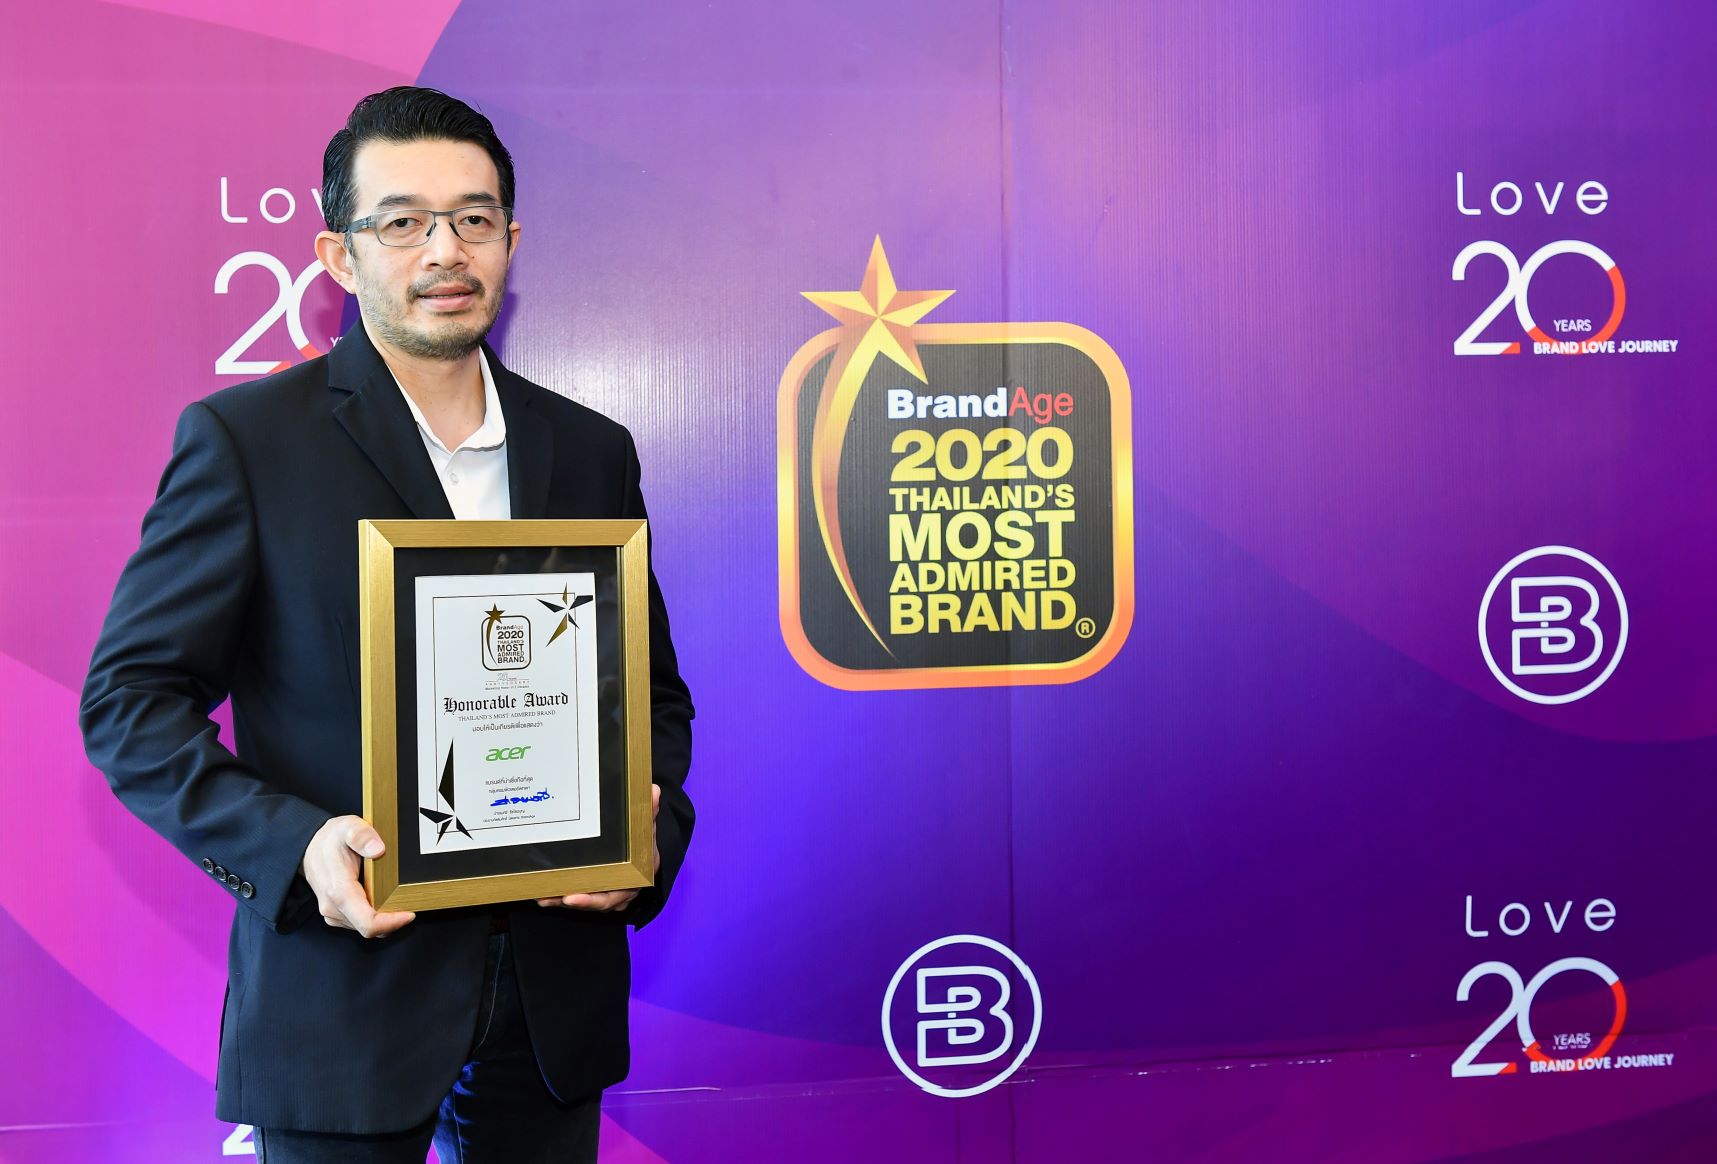 brandage 19 re ที่สุดของความภาคภูมิใจ เอเซอร์คว้า 2 รางวัลการันตีคุณภาพ Thailand’s Most Admired Brand 2020 ต่อเนื่องเป็นปีที่ 10 และ Thailands Most Admired Company 2019 จากนิตยสารแบรนด์เอจ